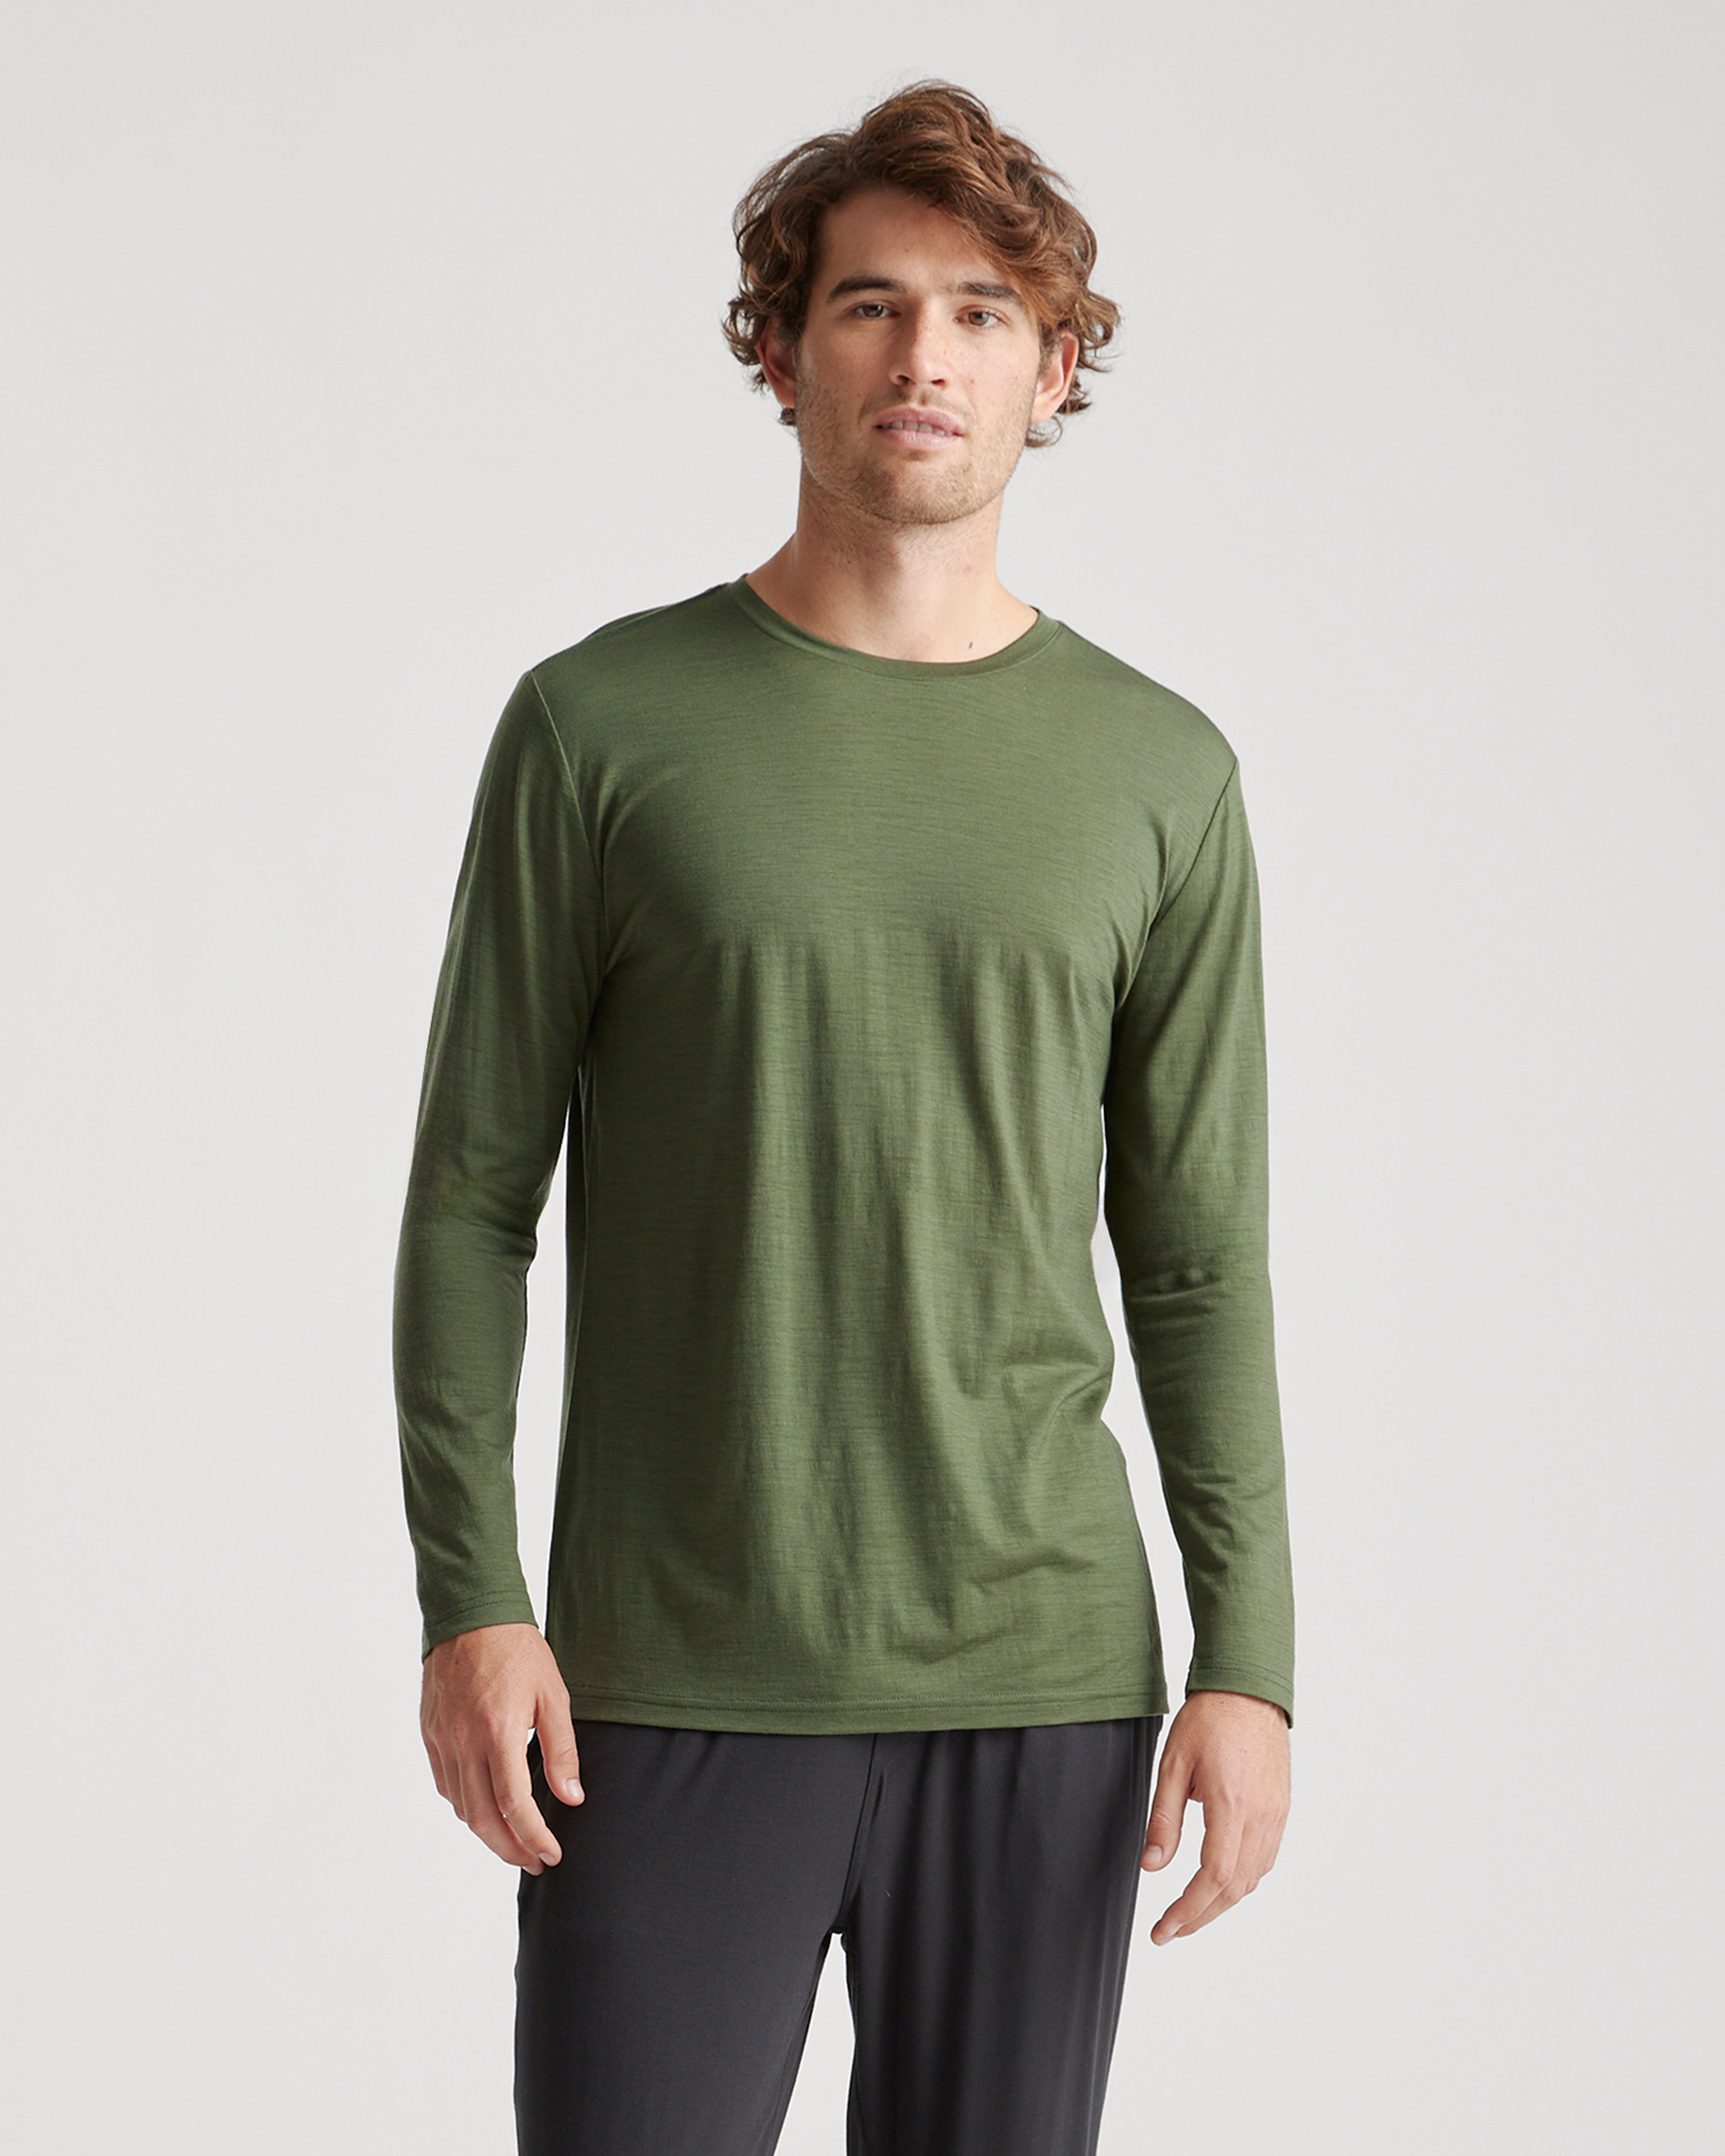 Quince Men's 100% Merino Wool All-season Long Sleeve Base Layer T-shirt In Green